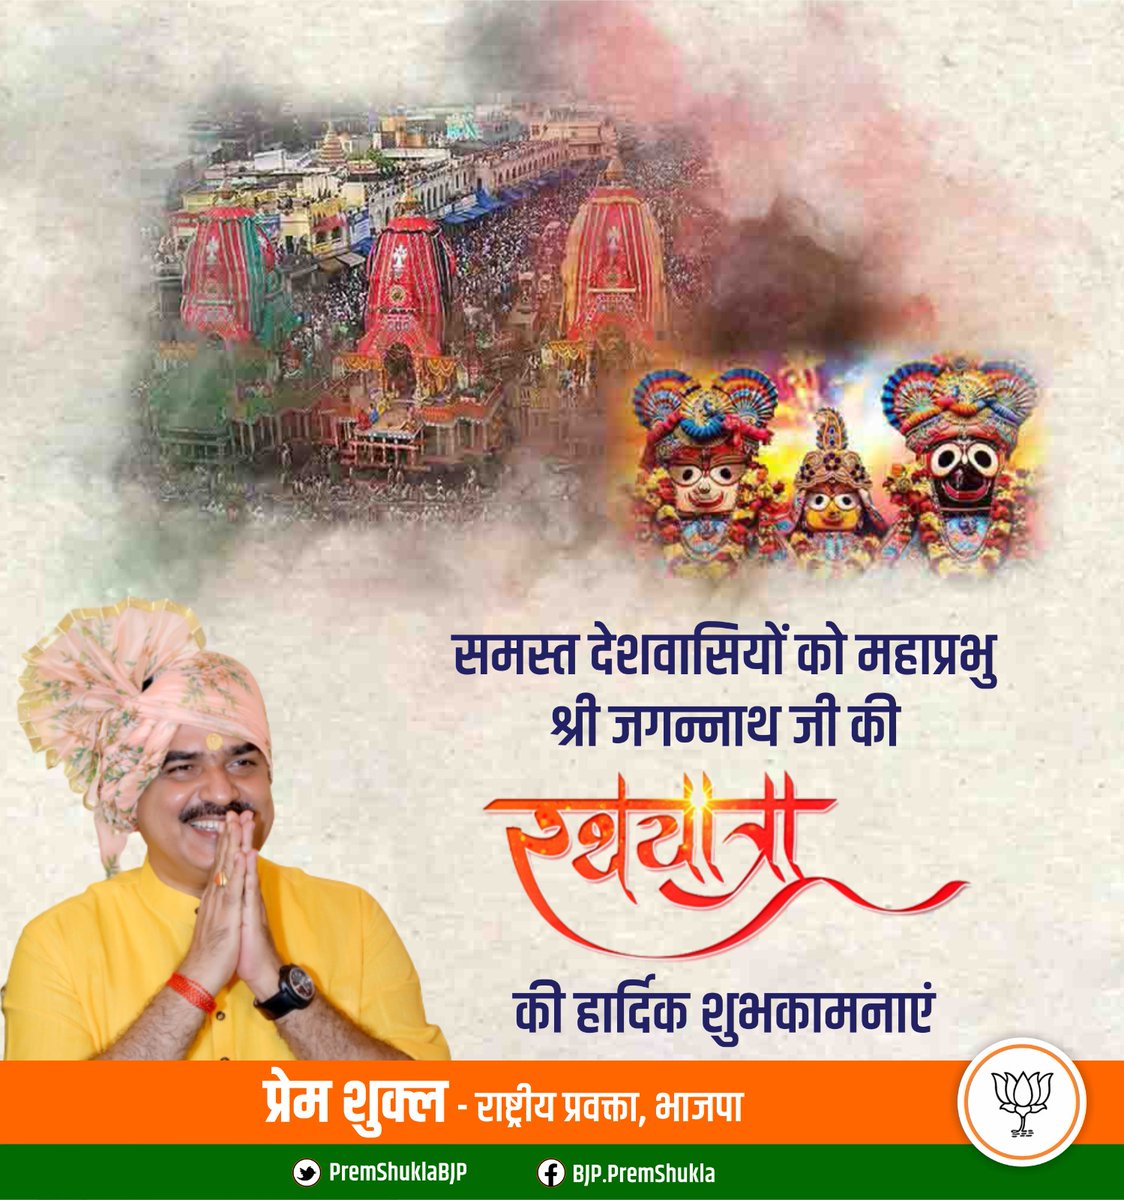 समस्त देशवासियों को महाप्रभु श्री जगन्नाथ जी की रथयात्रा की हार्दिक शुभकामनाएं।
#Puri #PuriJagarnath #PuriRathYatra